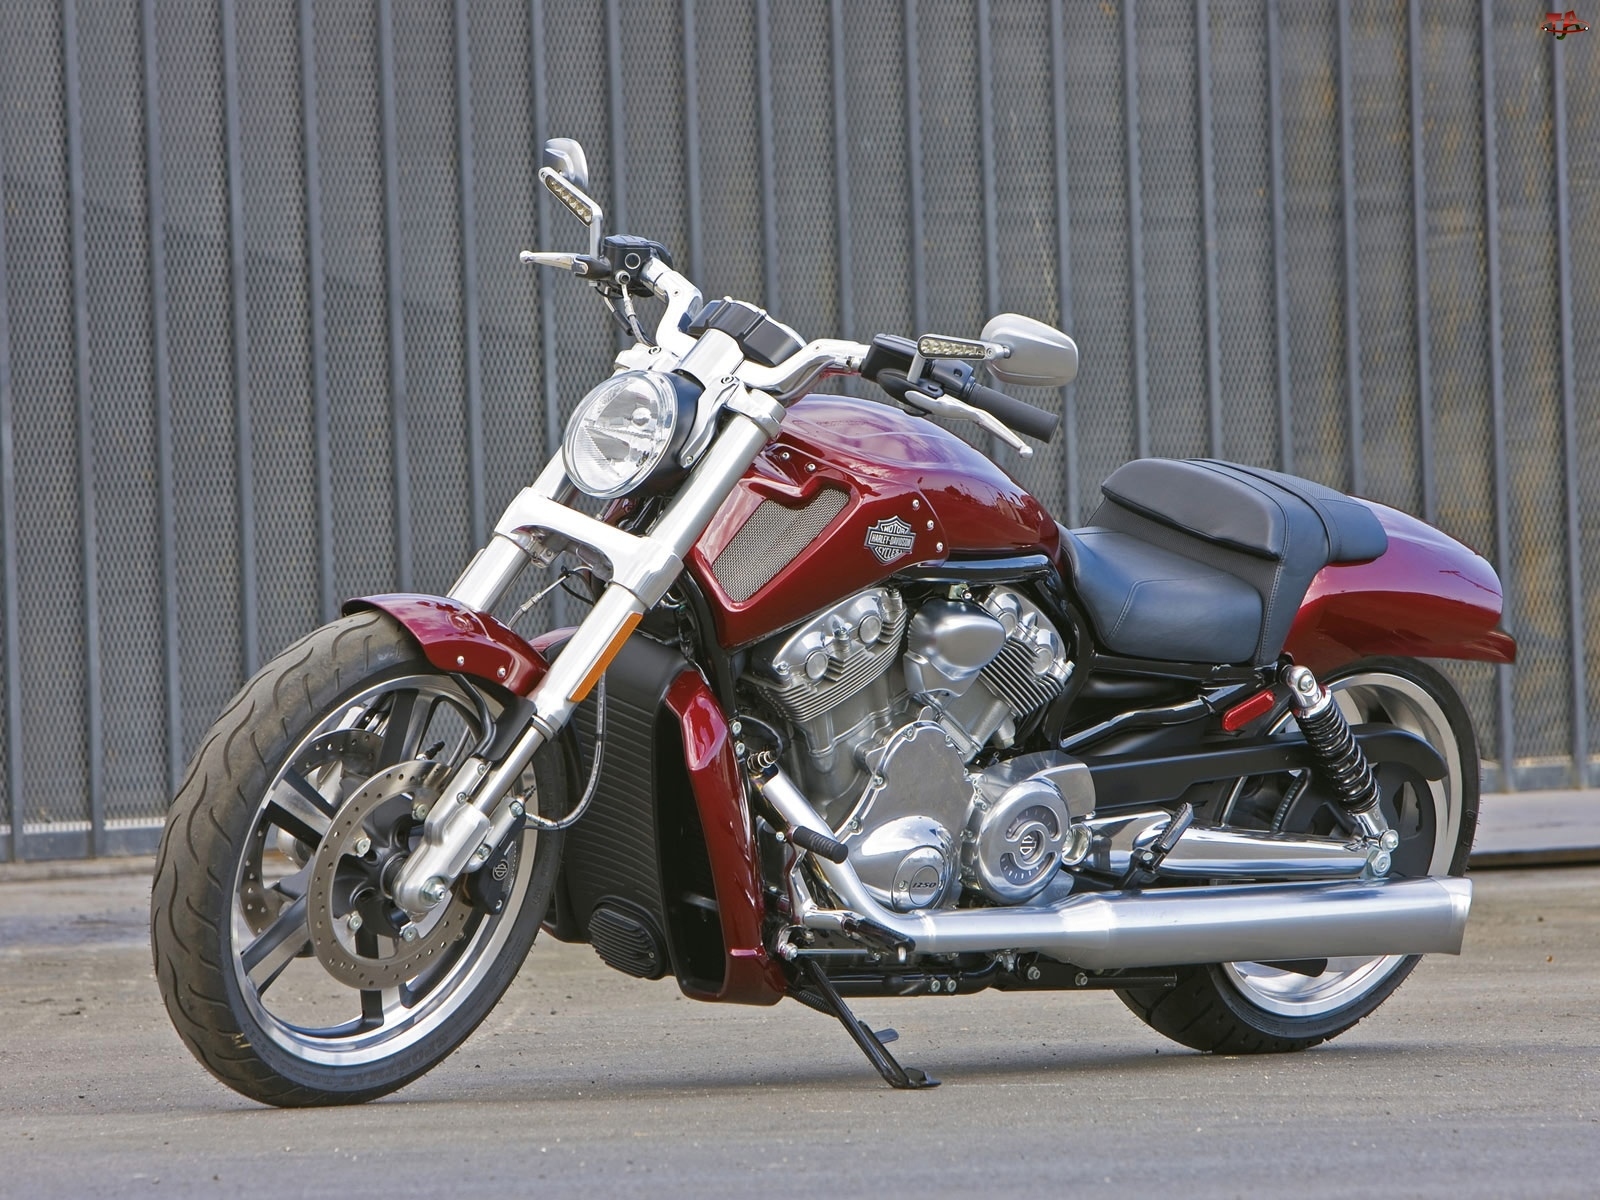 Powietrza, Harley Davidson V-Rod Muscle, Wloty